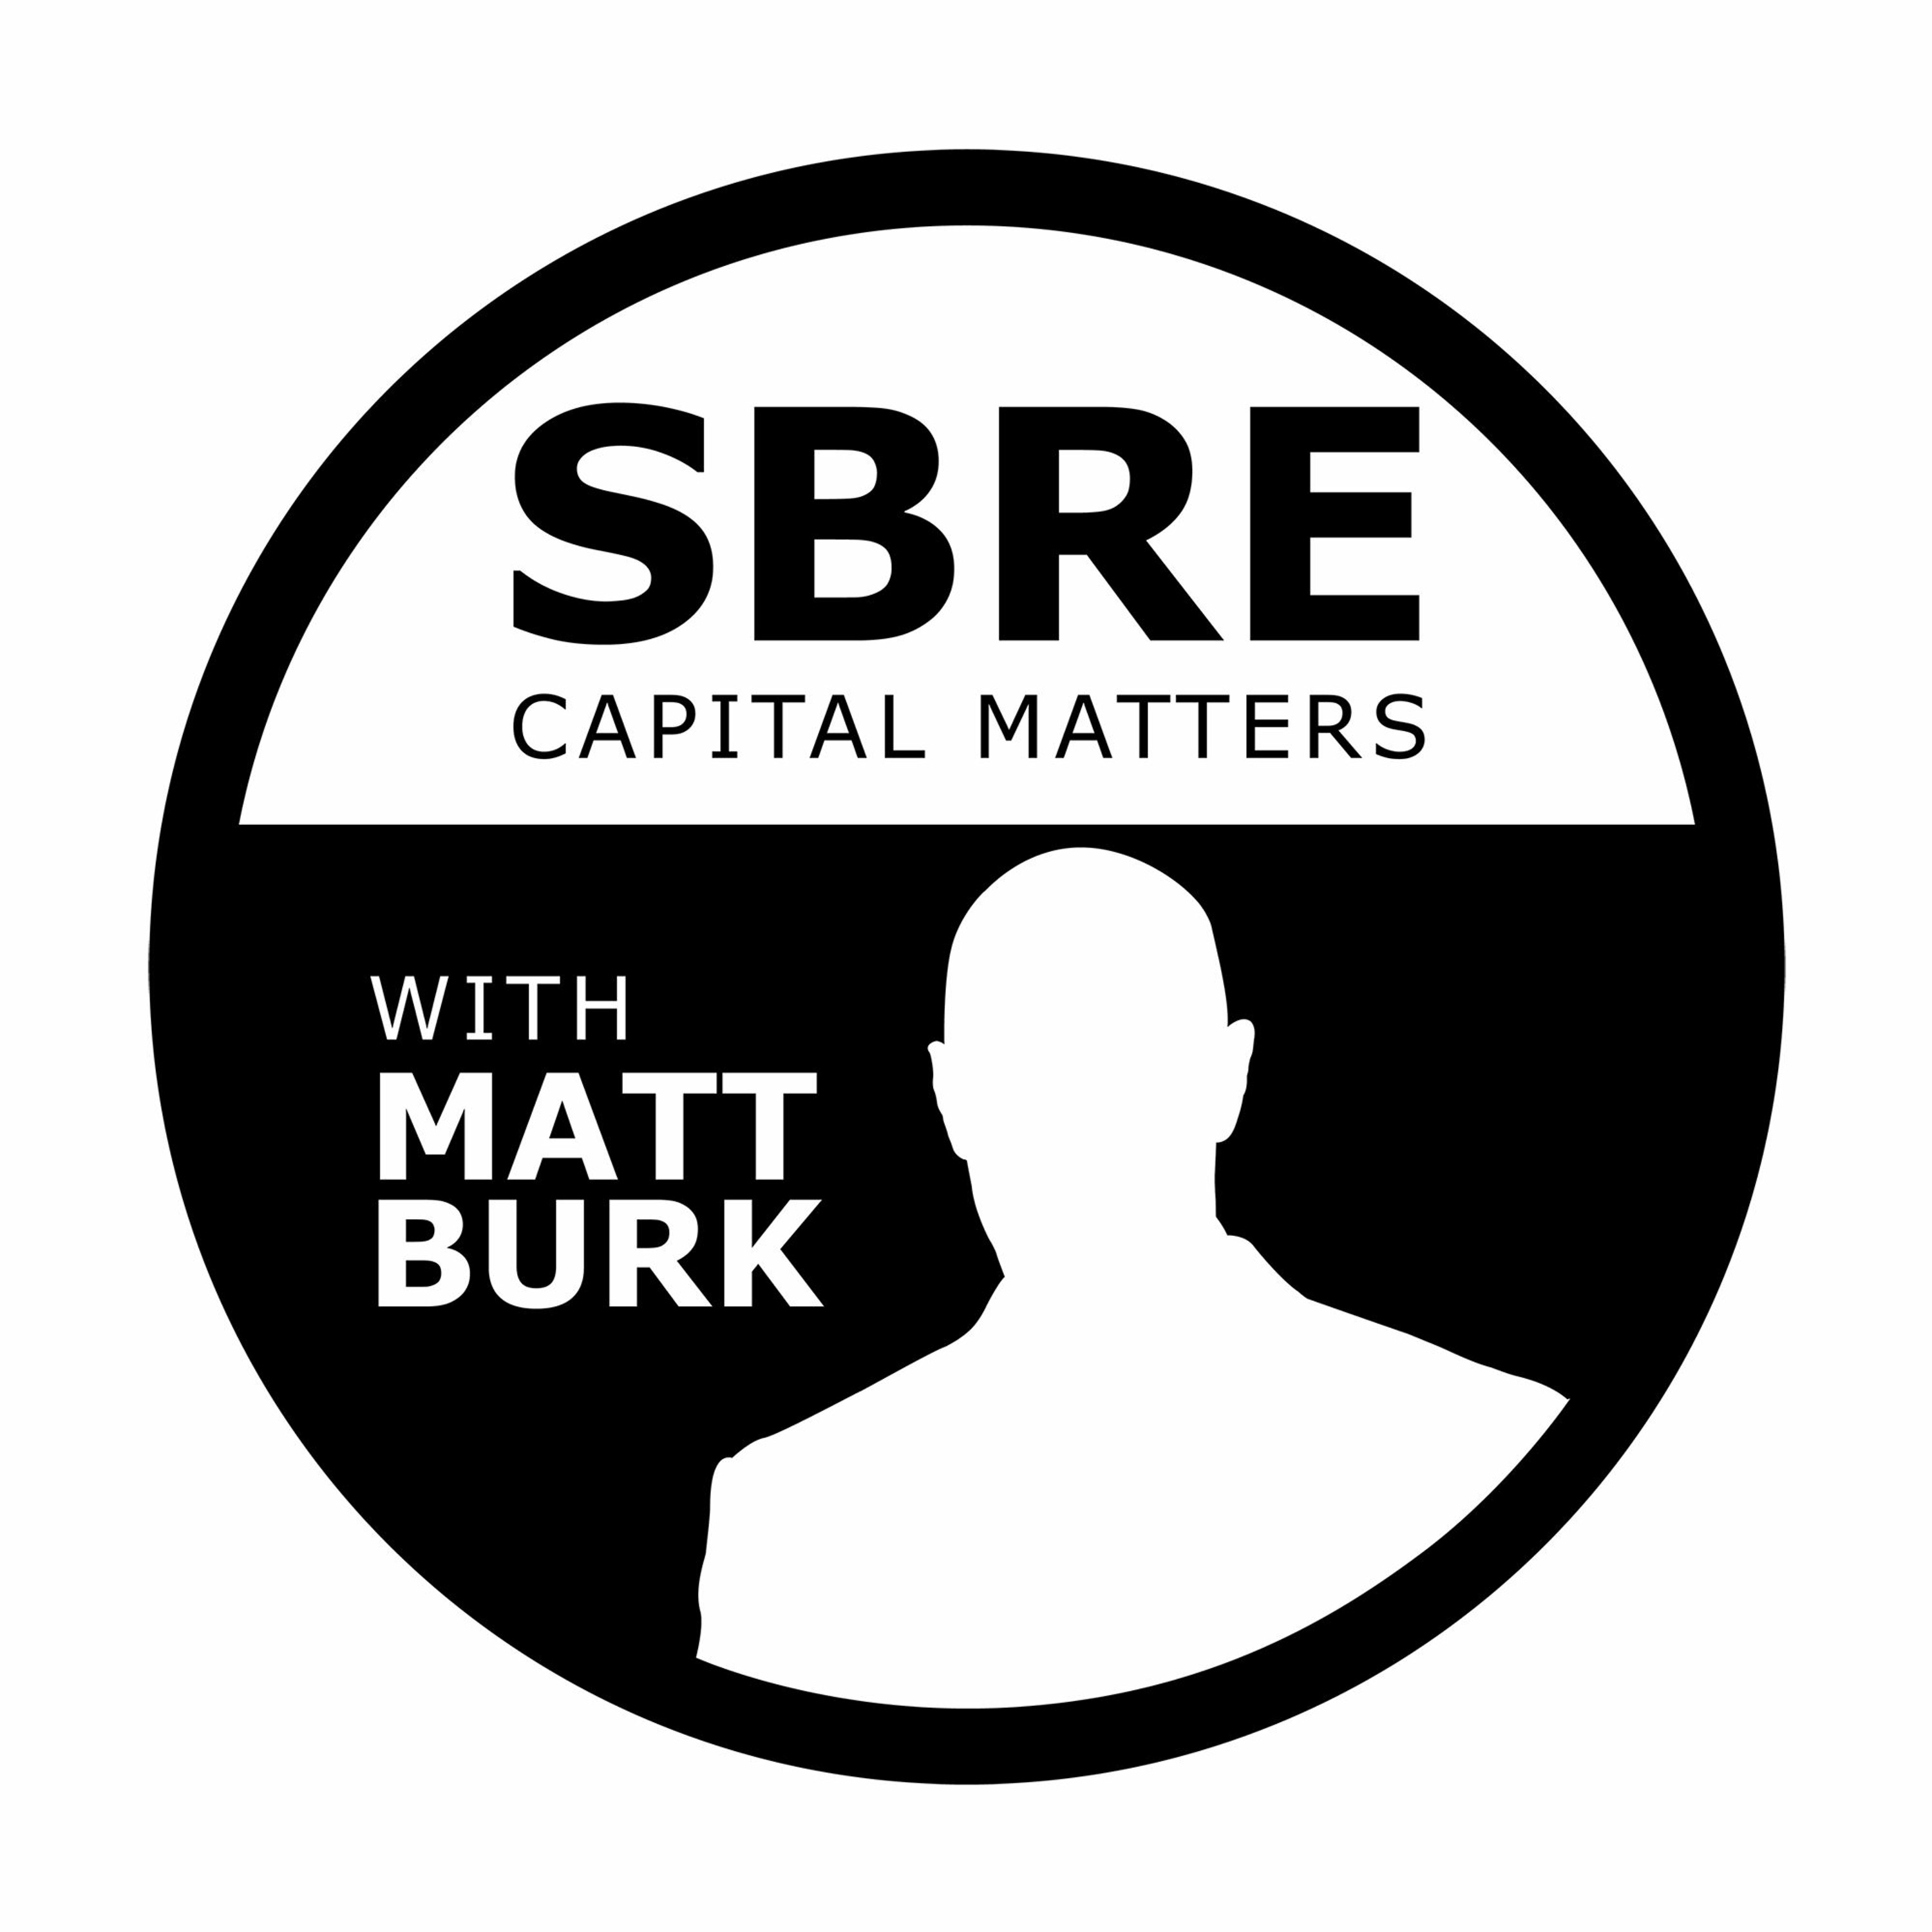 SBRE Capital Matters With Matt Burk SHOW #8 12/6/17